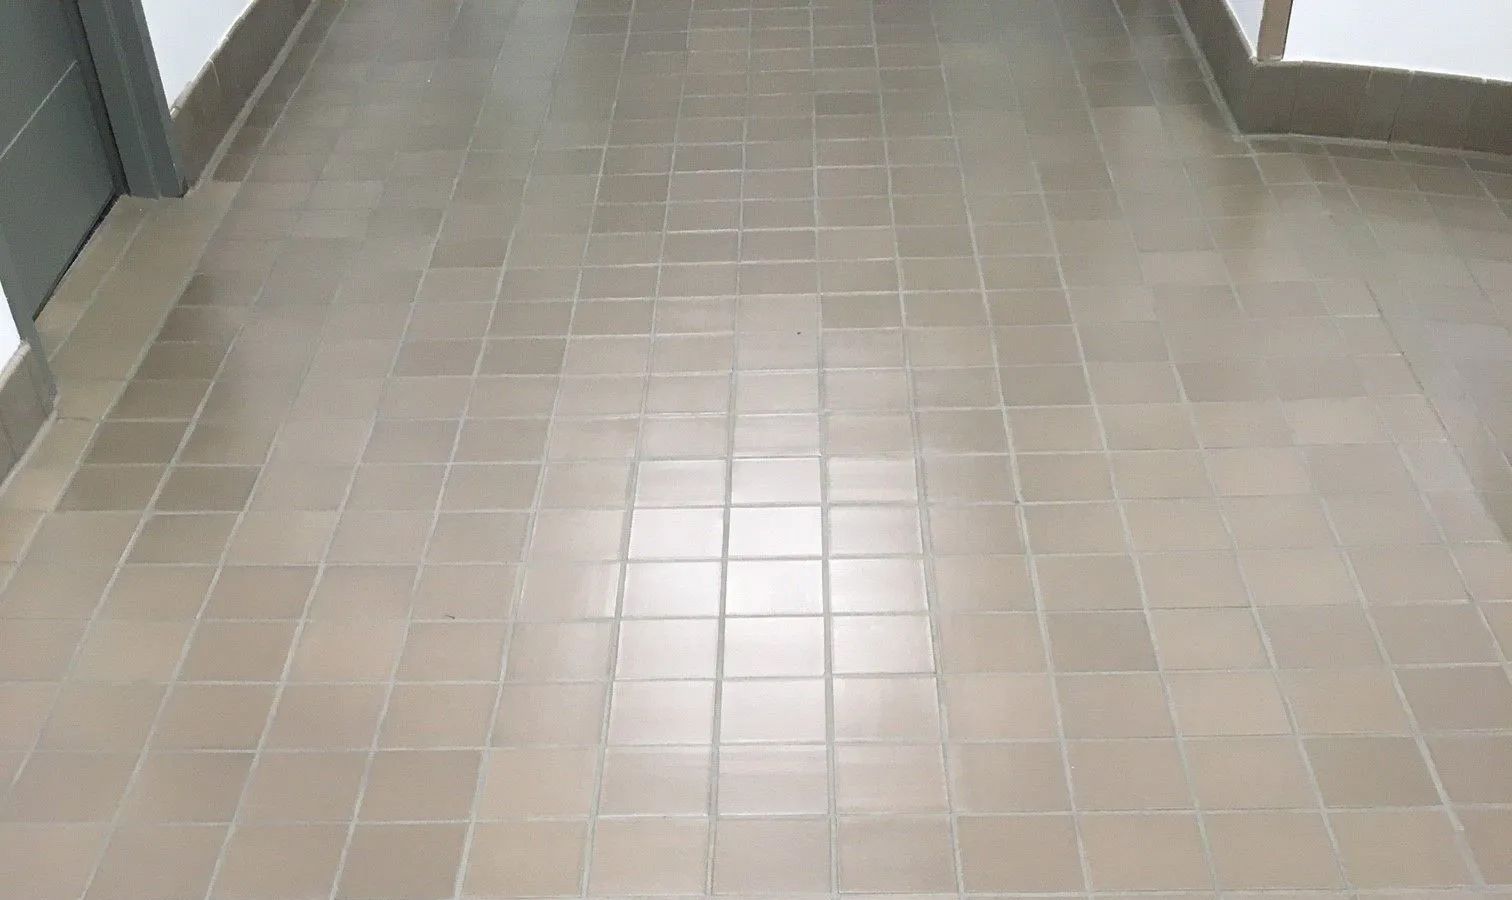 A hallway with a tiled floor and a door.